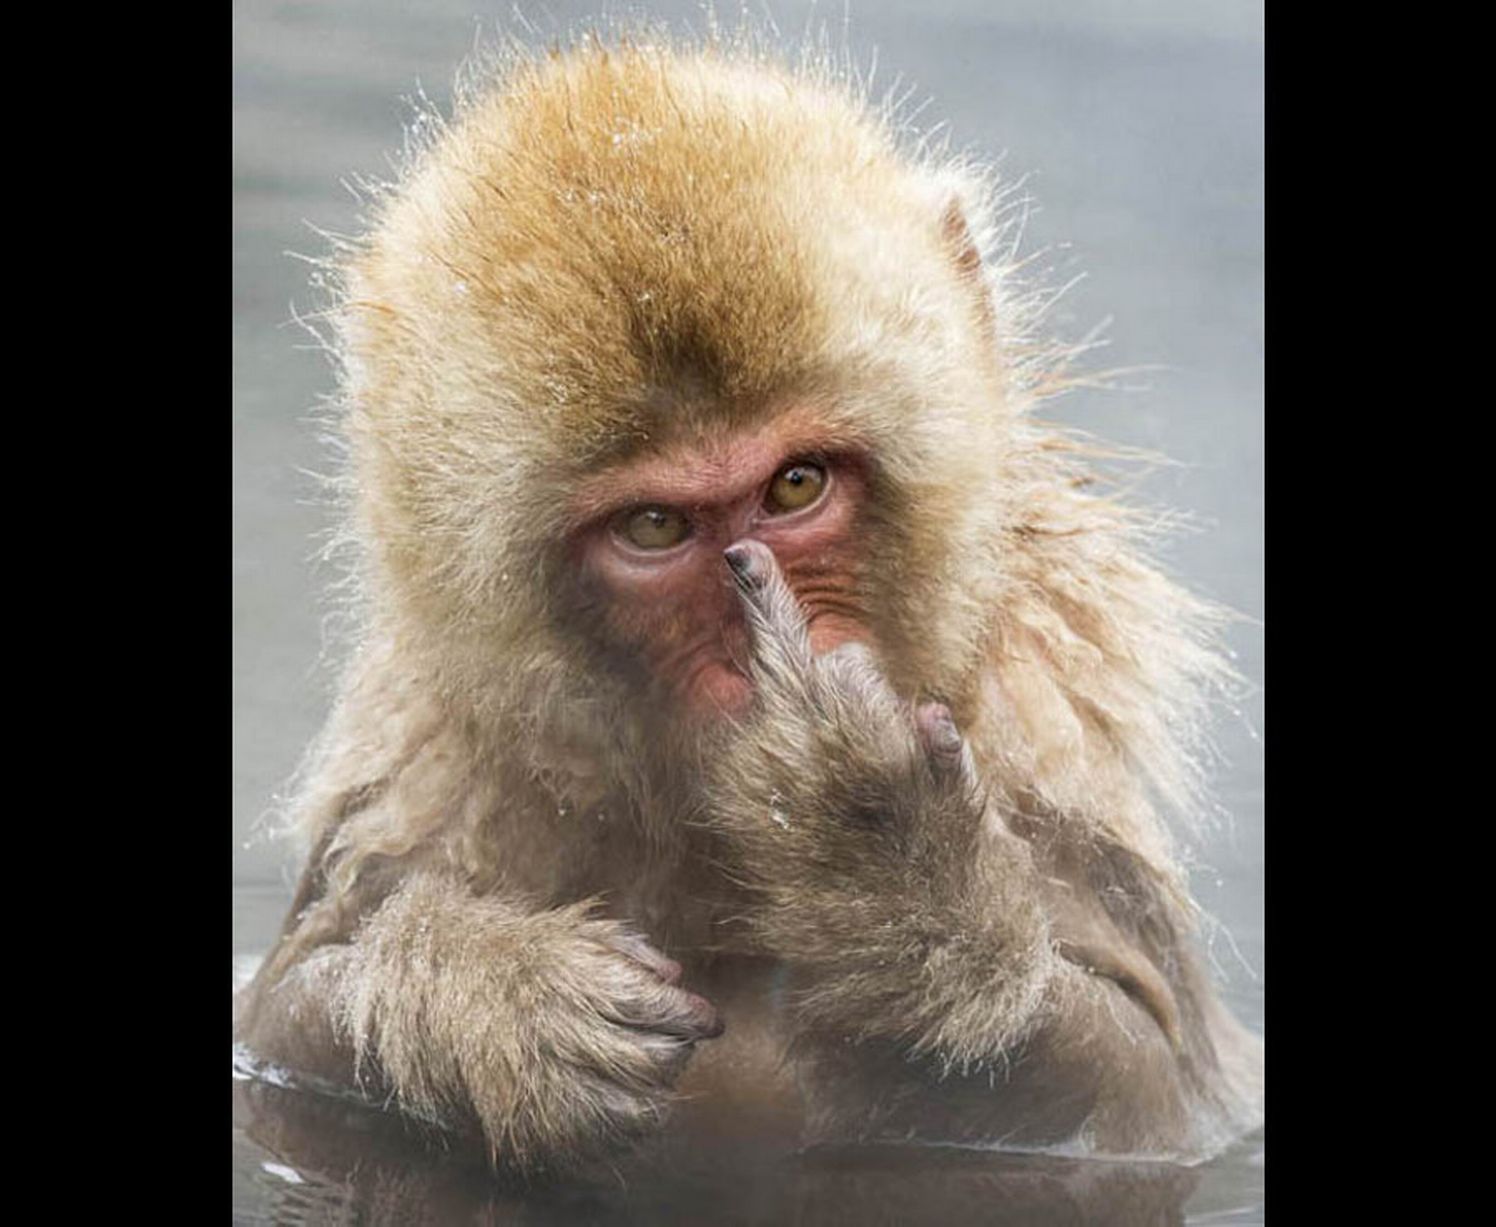 The cheeky Japanese macaque seen at Jigokudani Snow Monkey Park in Japan